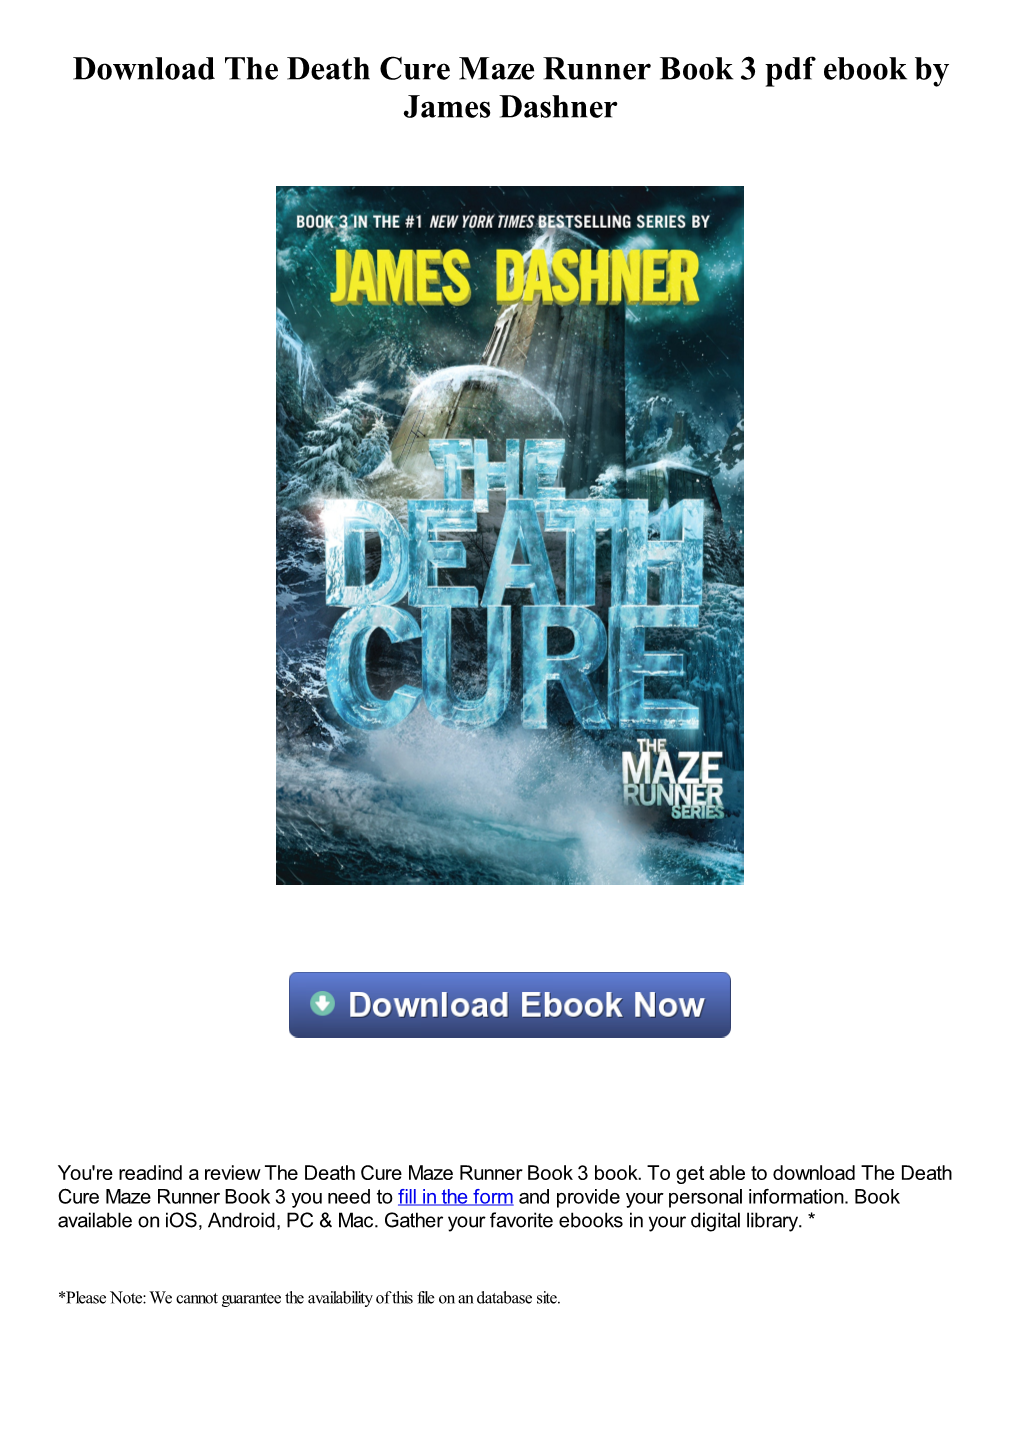 Download the Death Cure Maze Runner Book 3 Pdf Ebook by James Dashner